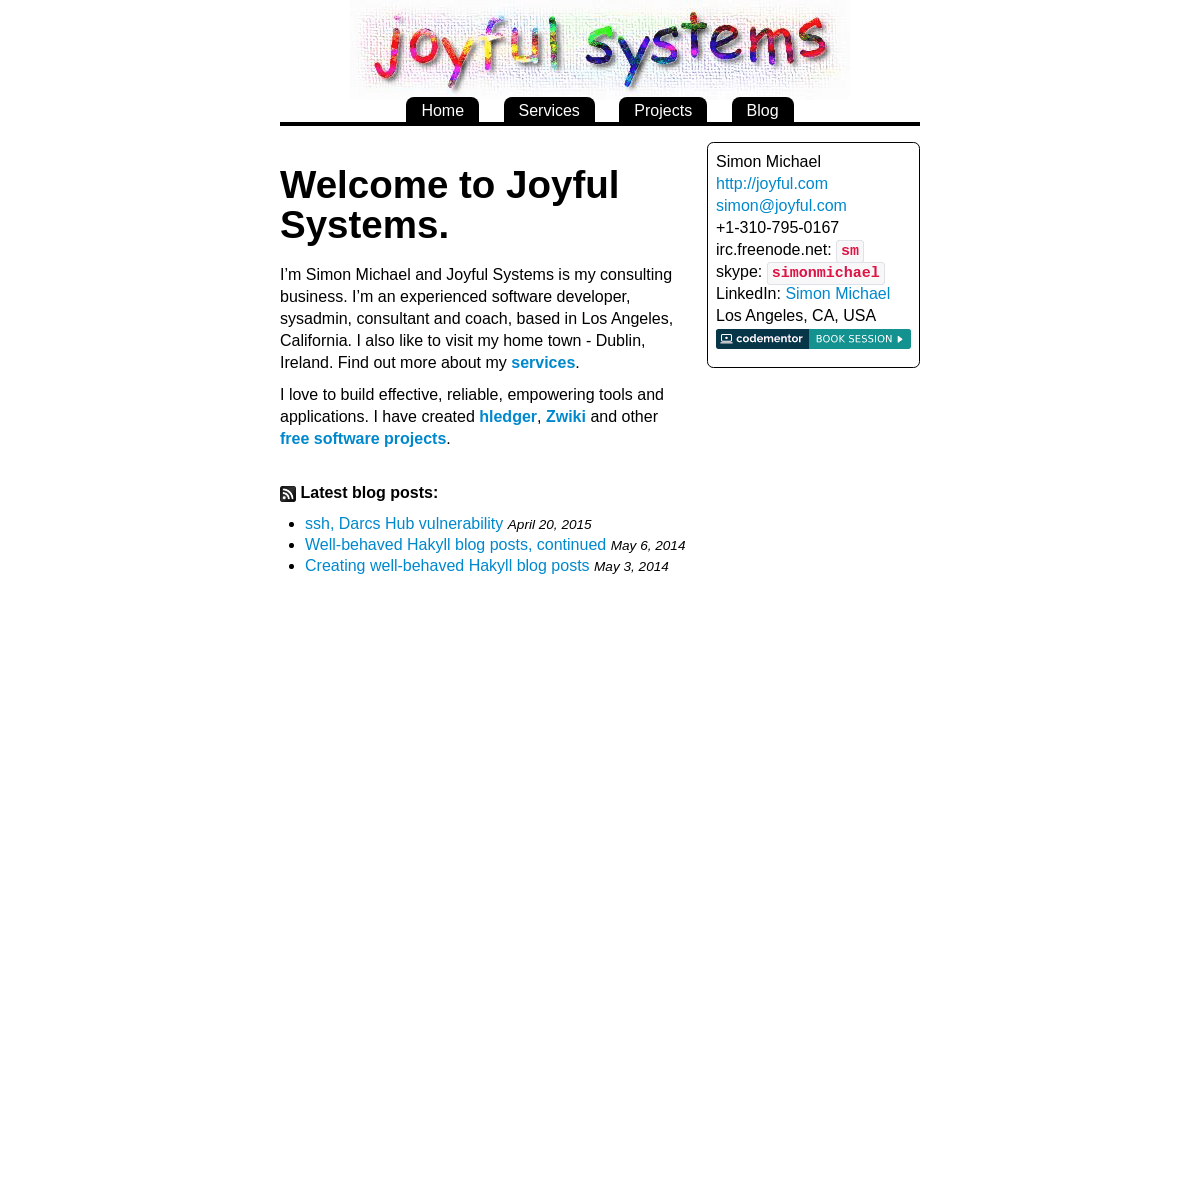 A complete backup of https://joyful.com